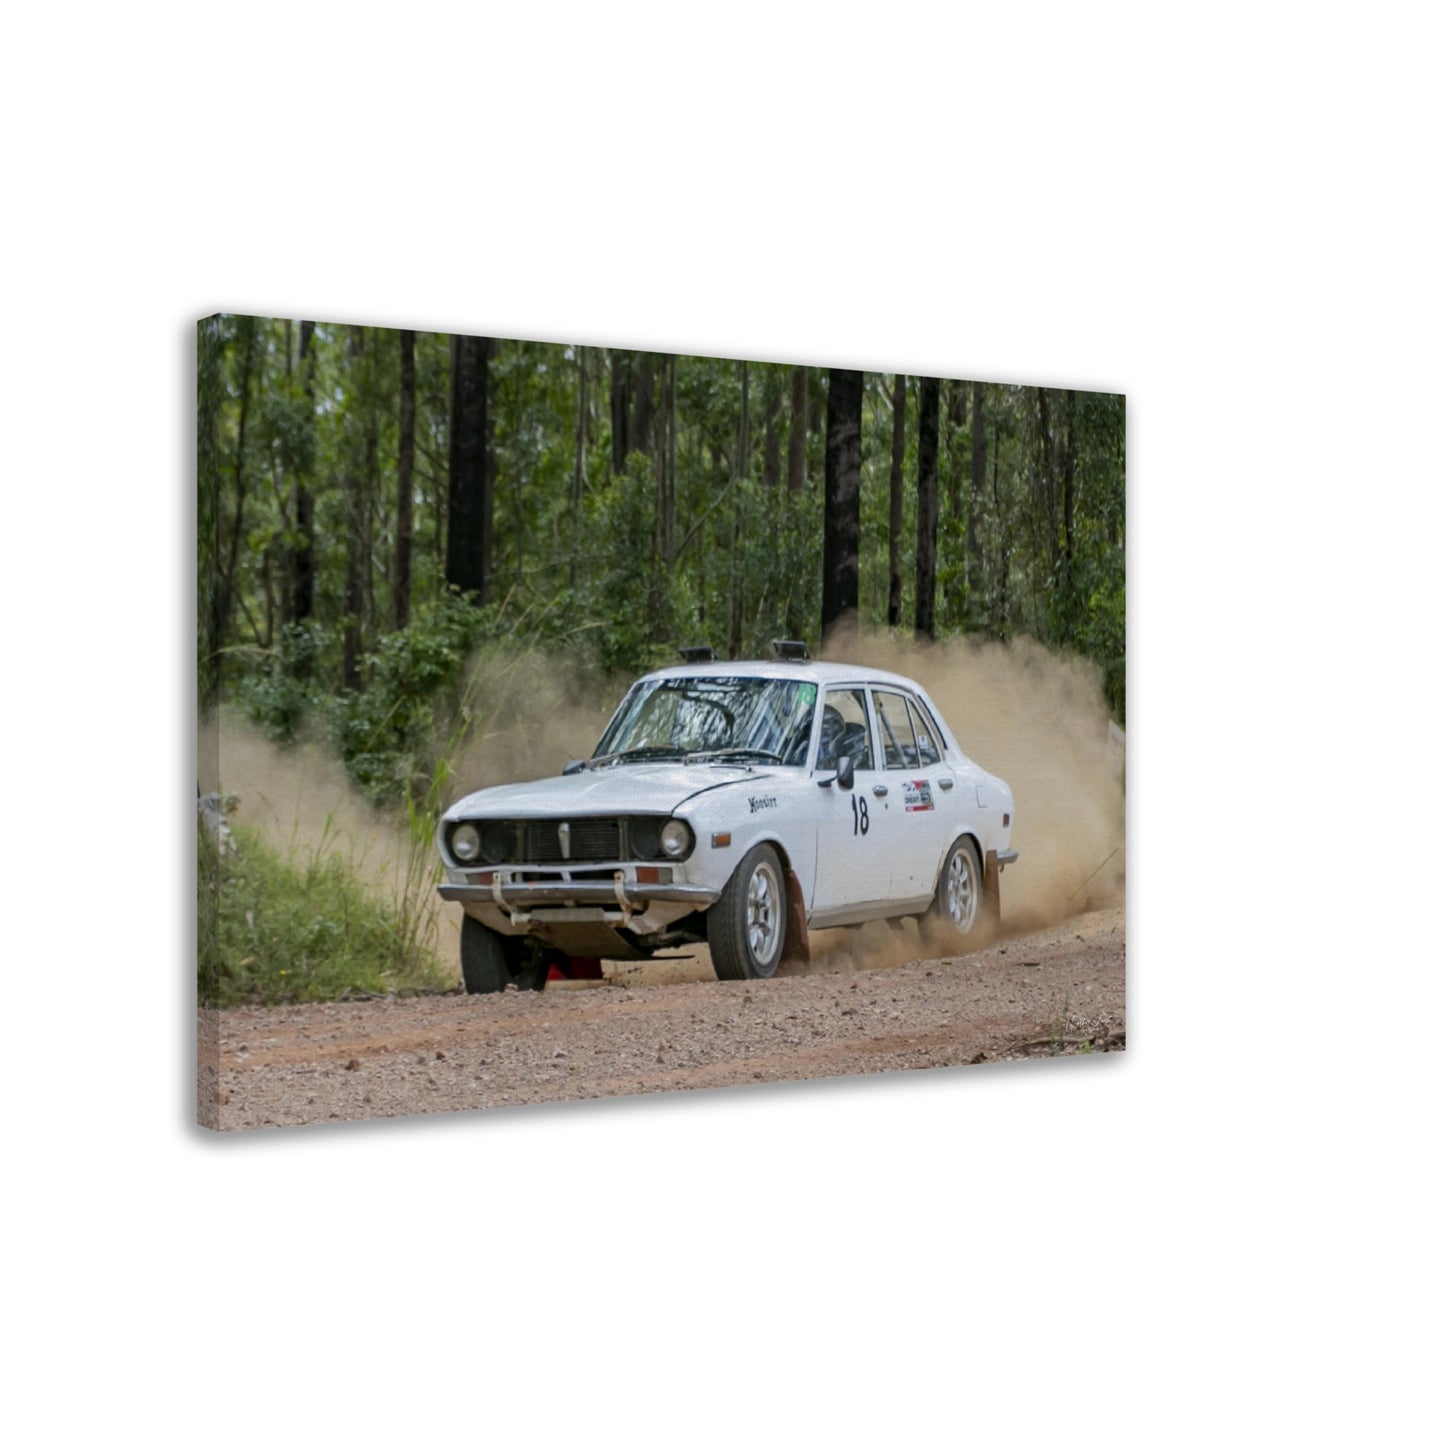 Amsag Taree Rally - Car 18 - Evan Bollard / Don Smith